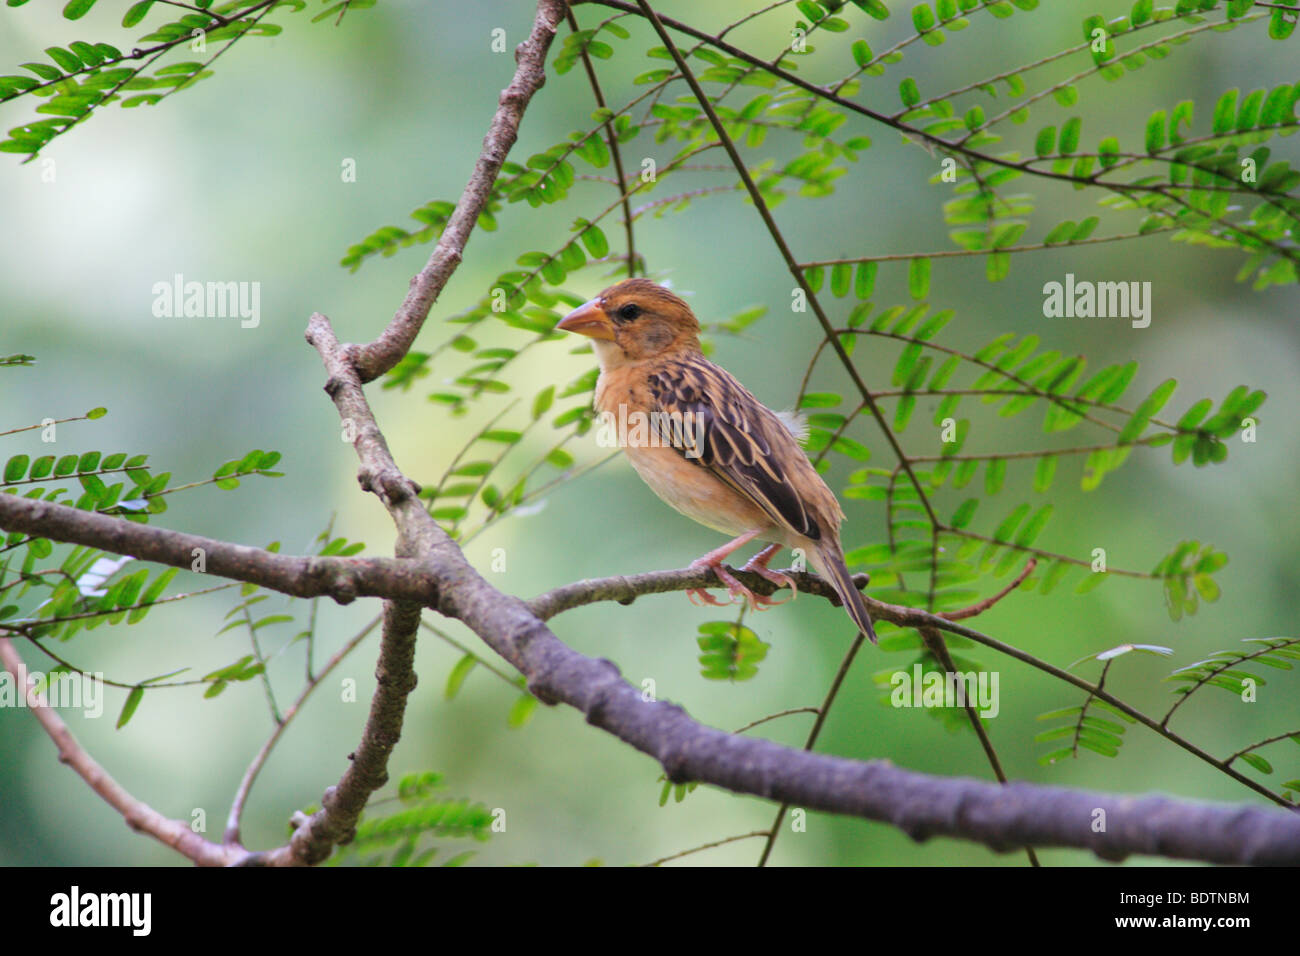 A common bird as seen in Malaysian tropical rainforest's. Stock Photo